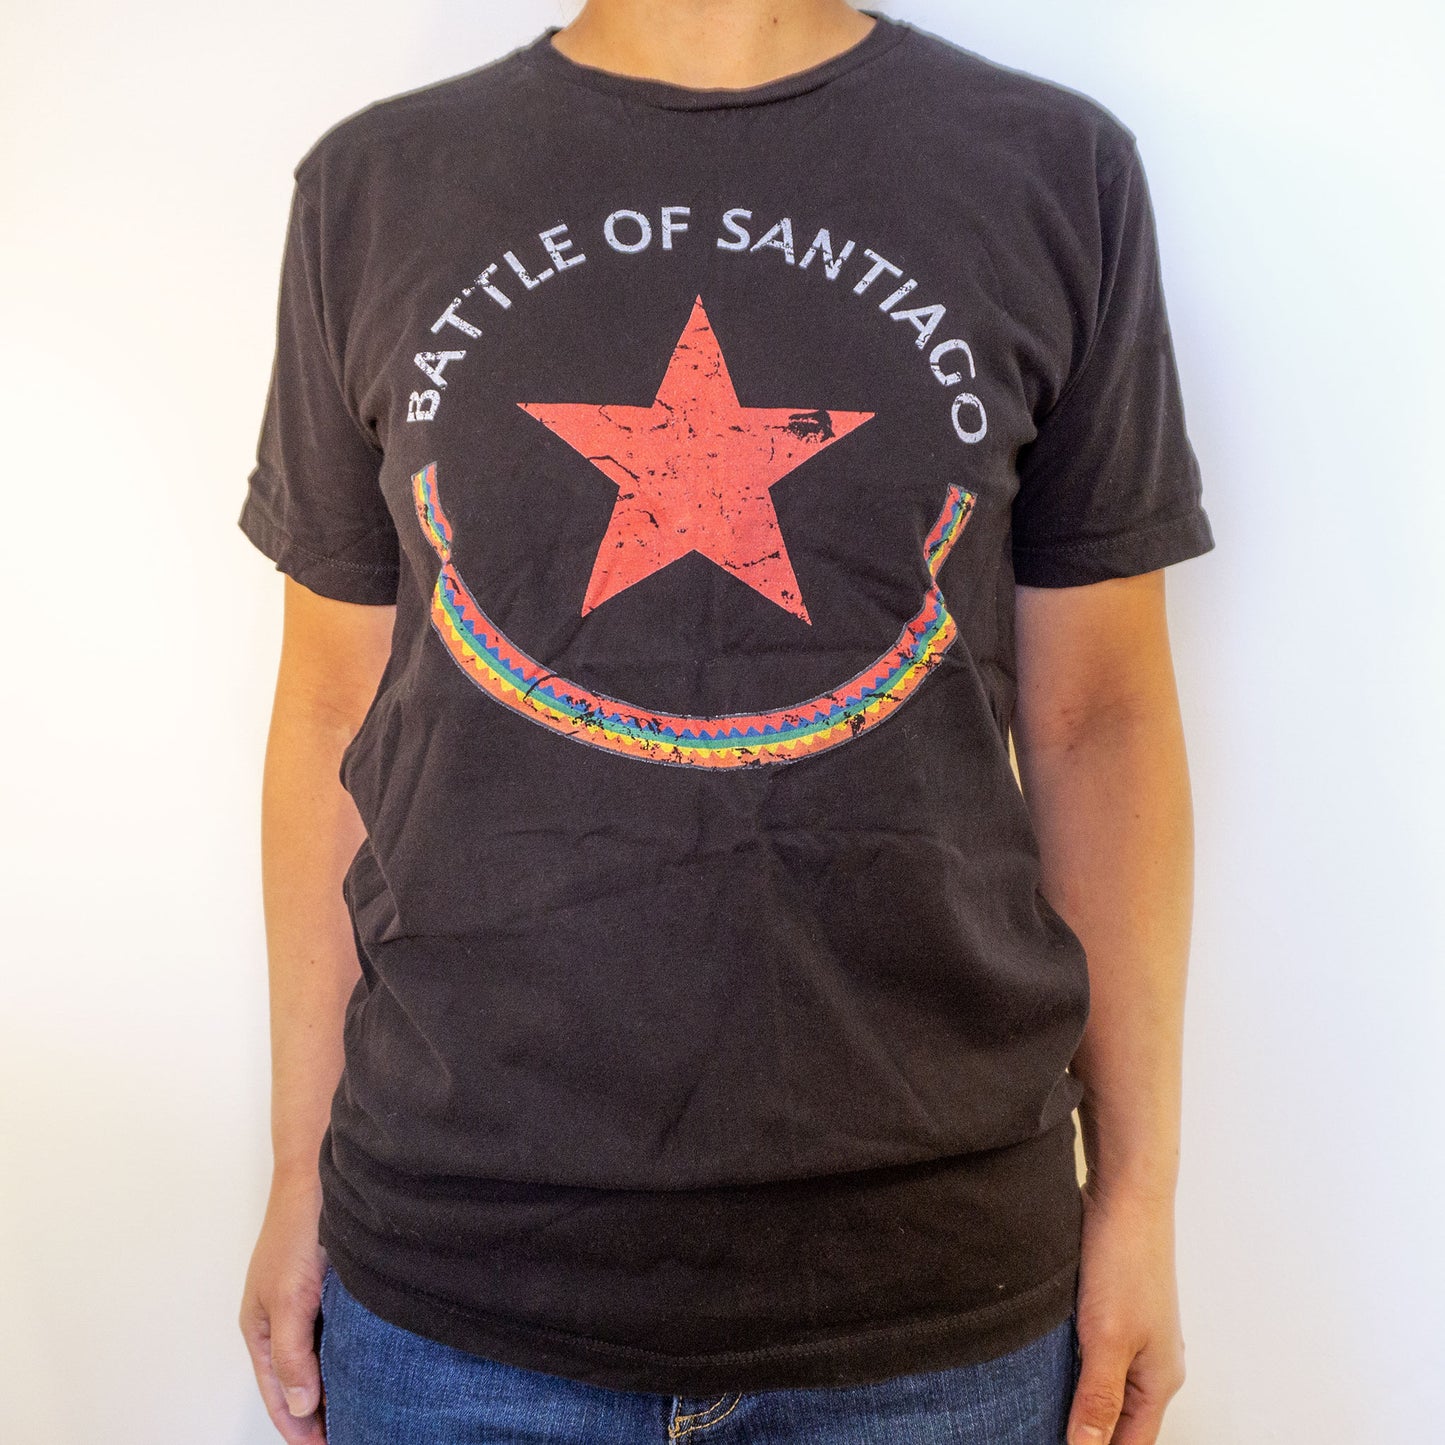 Battle of Santiago - Black T-Shirt with Colour band